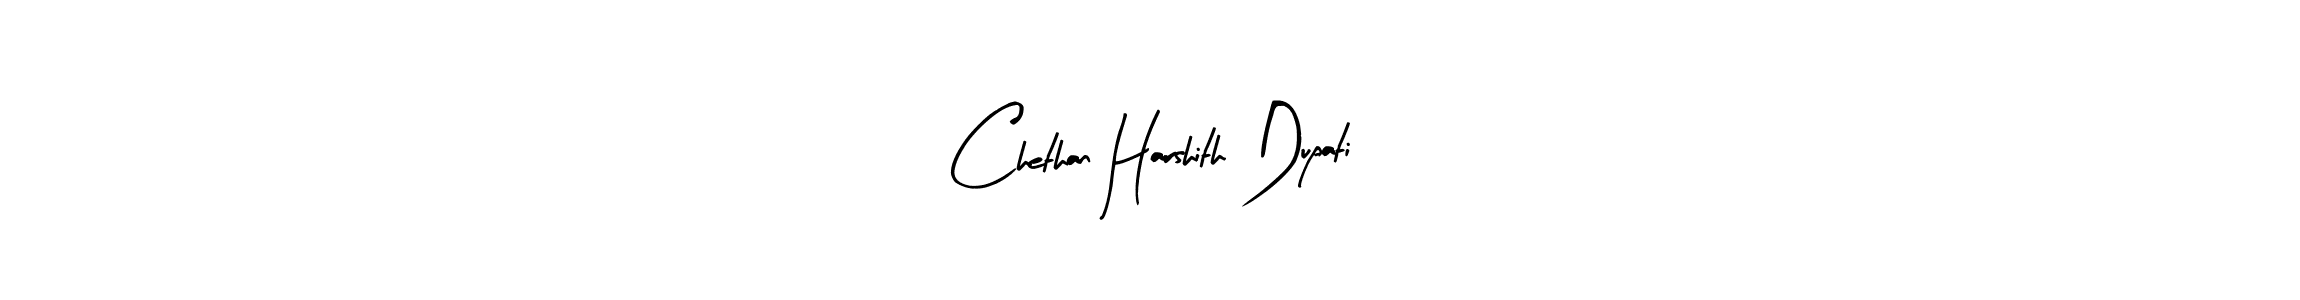 Chethan Harshith Dupati stylish signature style. Best Handwritten Sign (Arty Signature) for my name. Handwritten Signature Collection Ideas for my name Chethan Harshith Dupati. Chethan Harshith Dupati signature style 8 images and pictures png